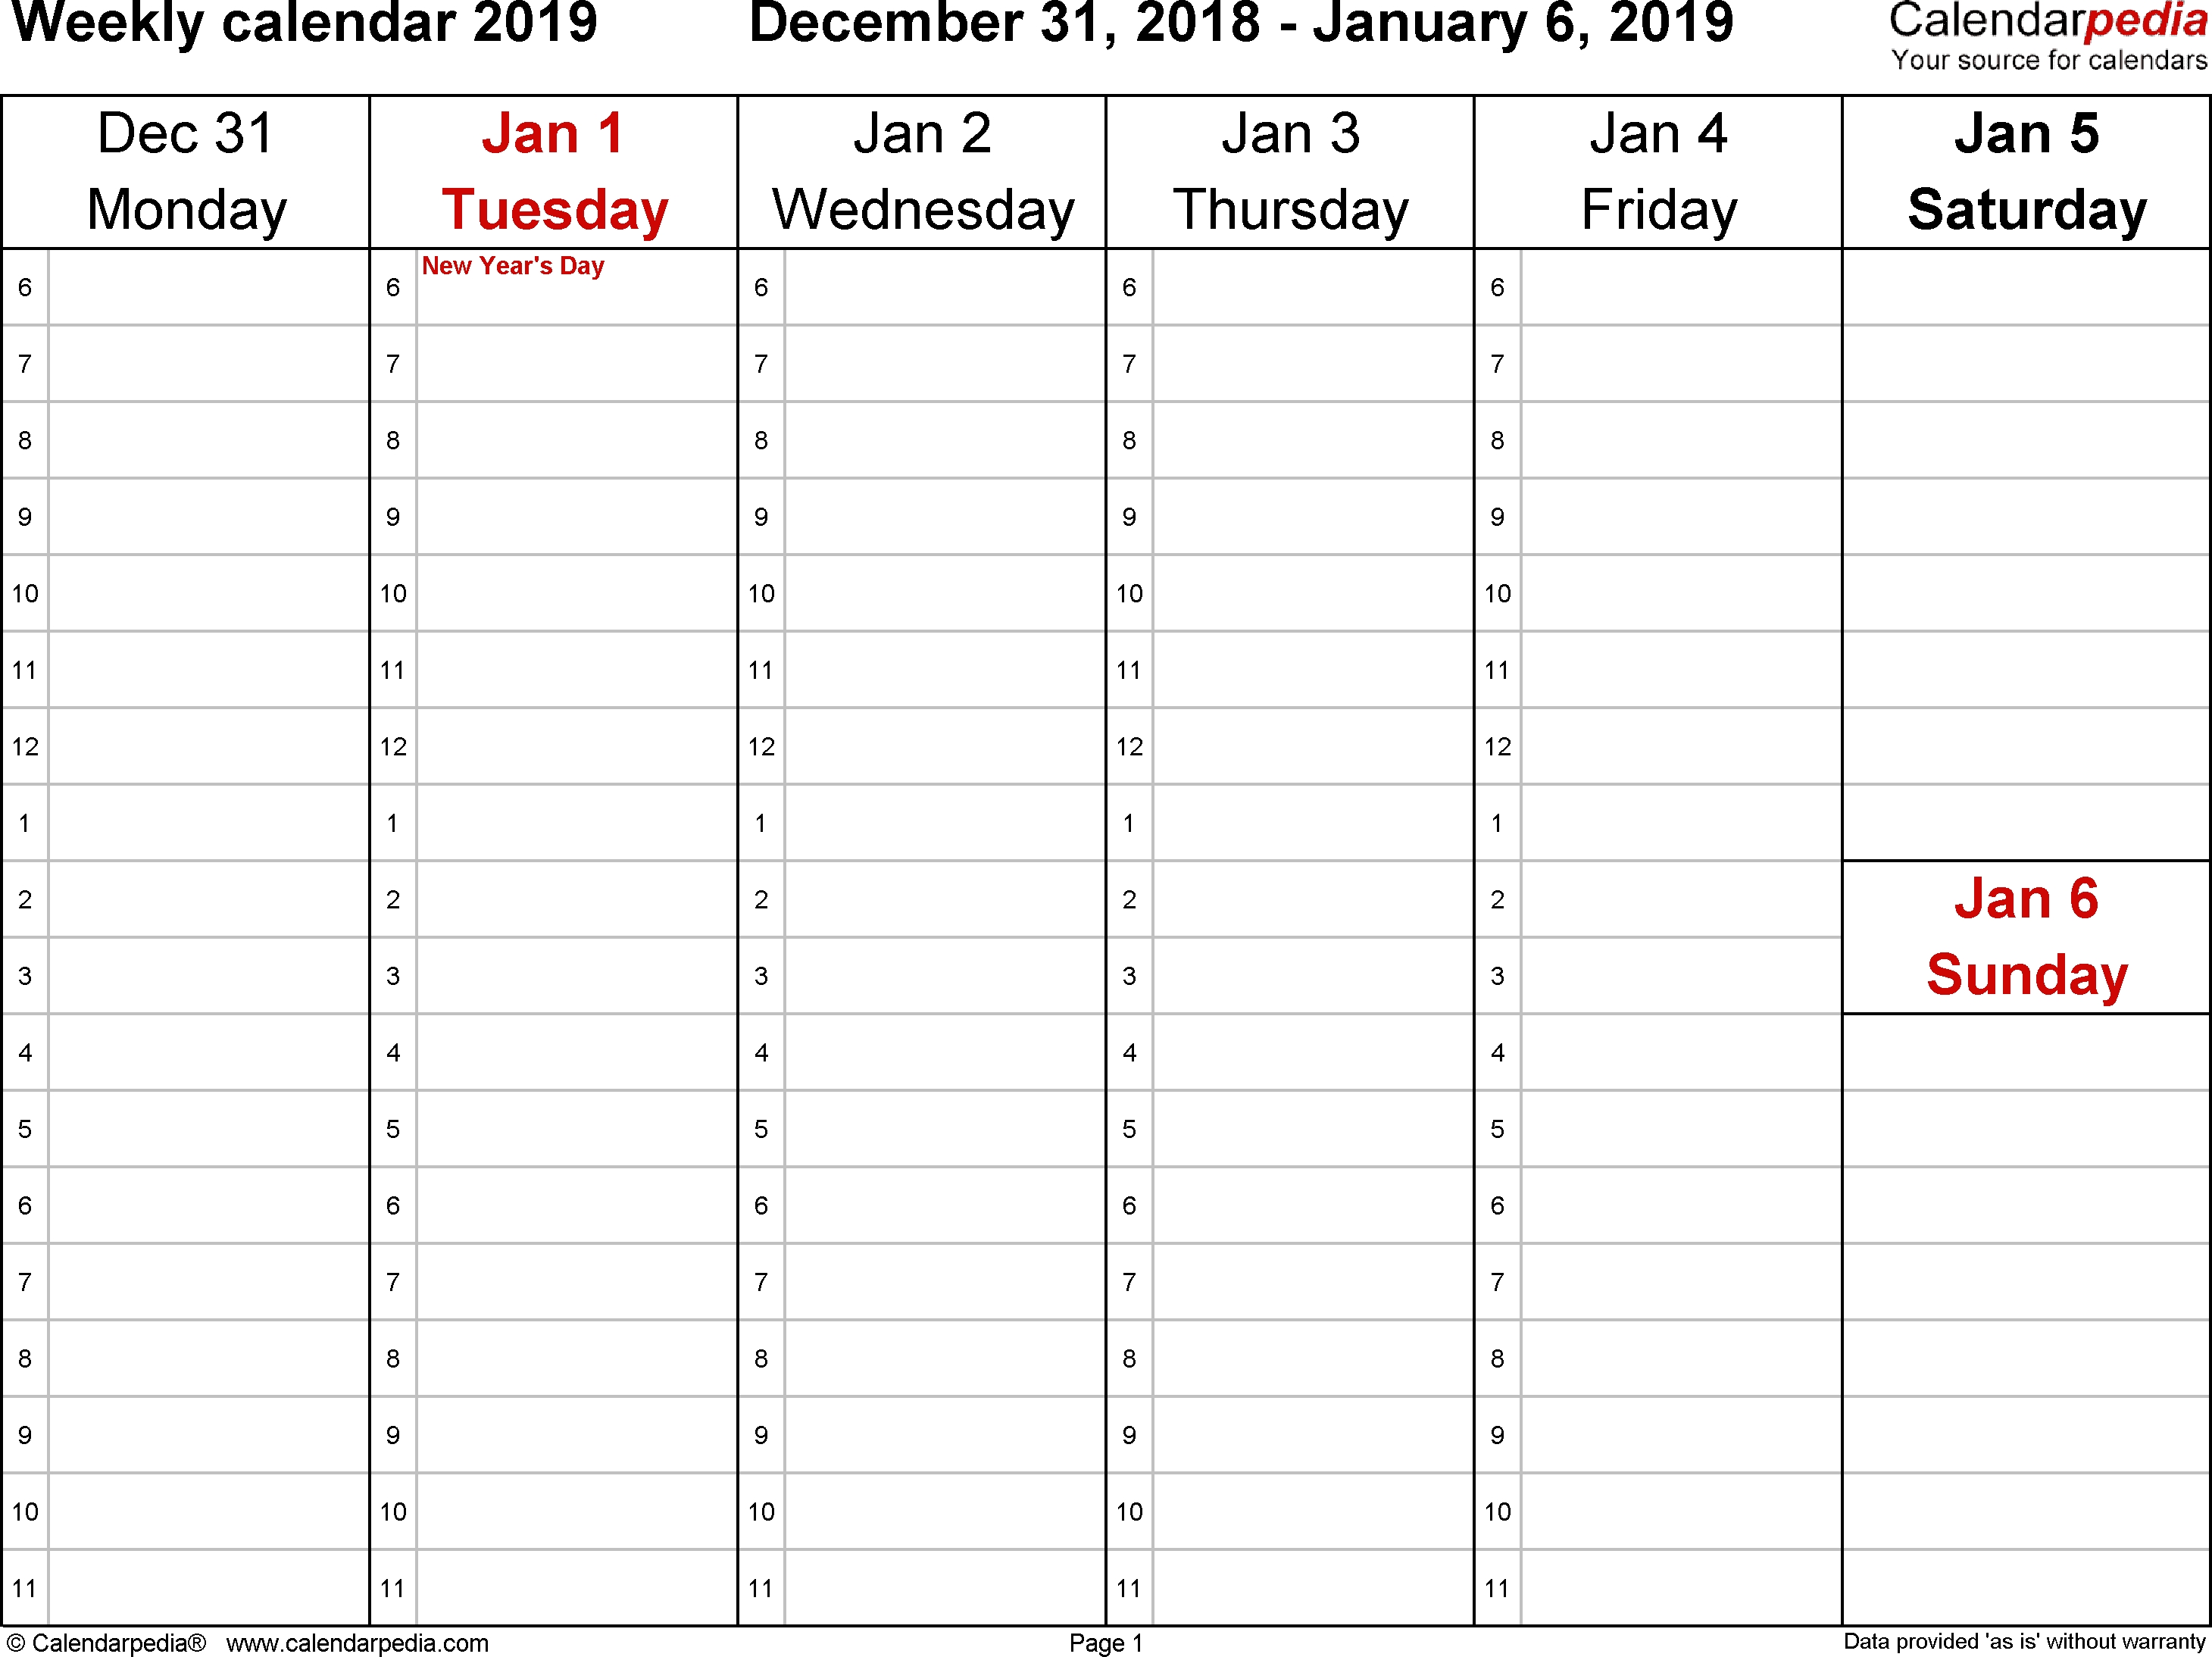 Weekly Calendar 2019 For Word - 12 Free Printable Templates pertaining to Free Printable Weekly Calendar Templates